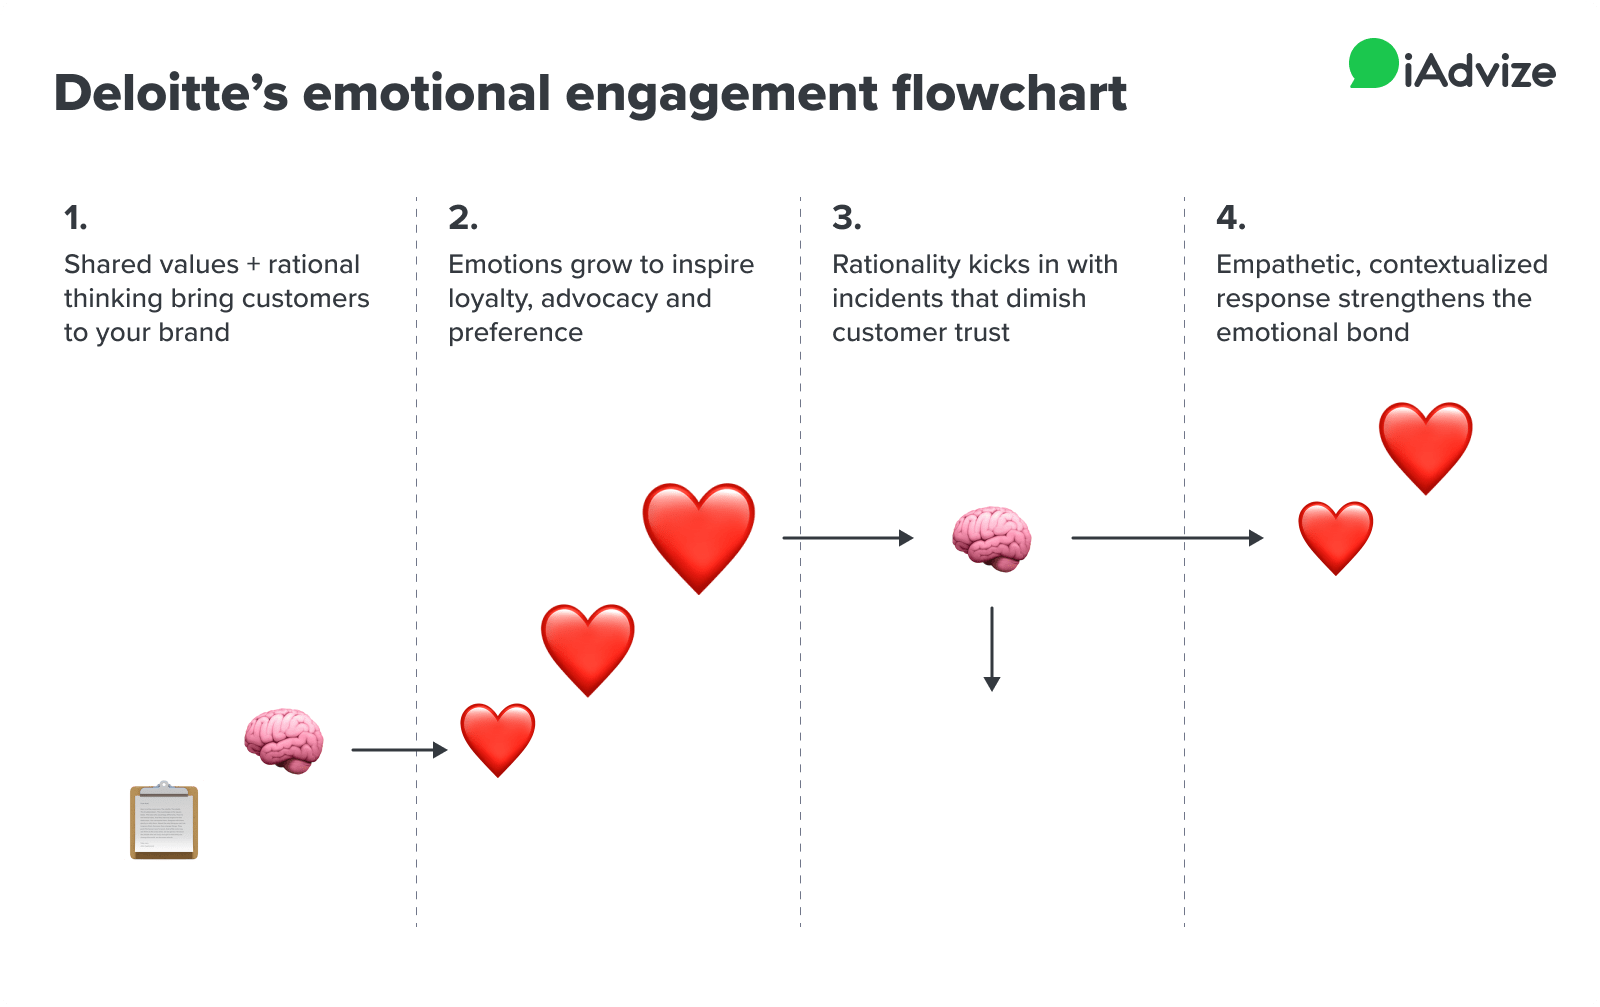 Deloitte's emotional engagement flowchart